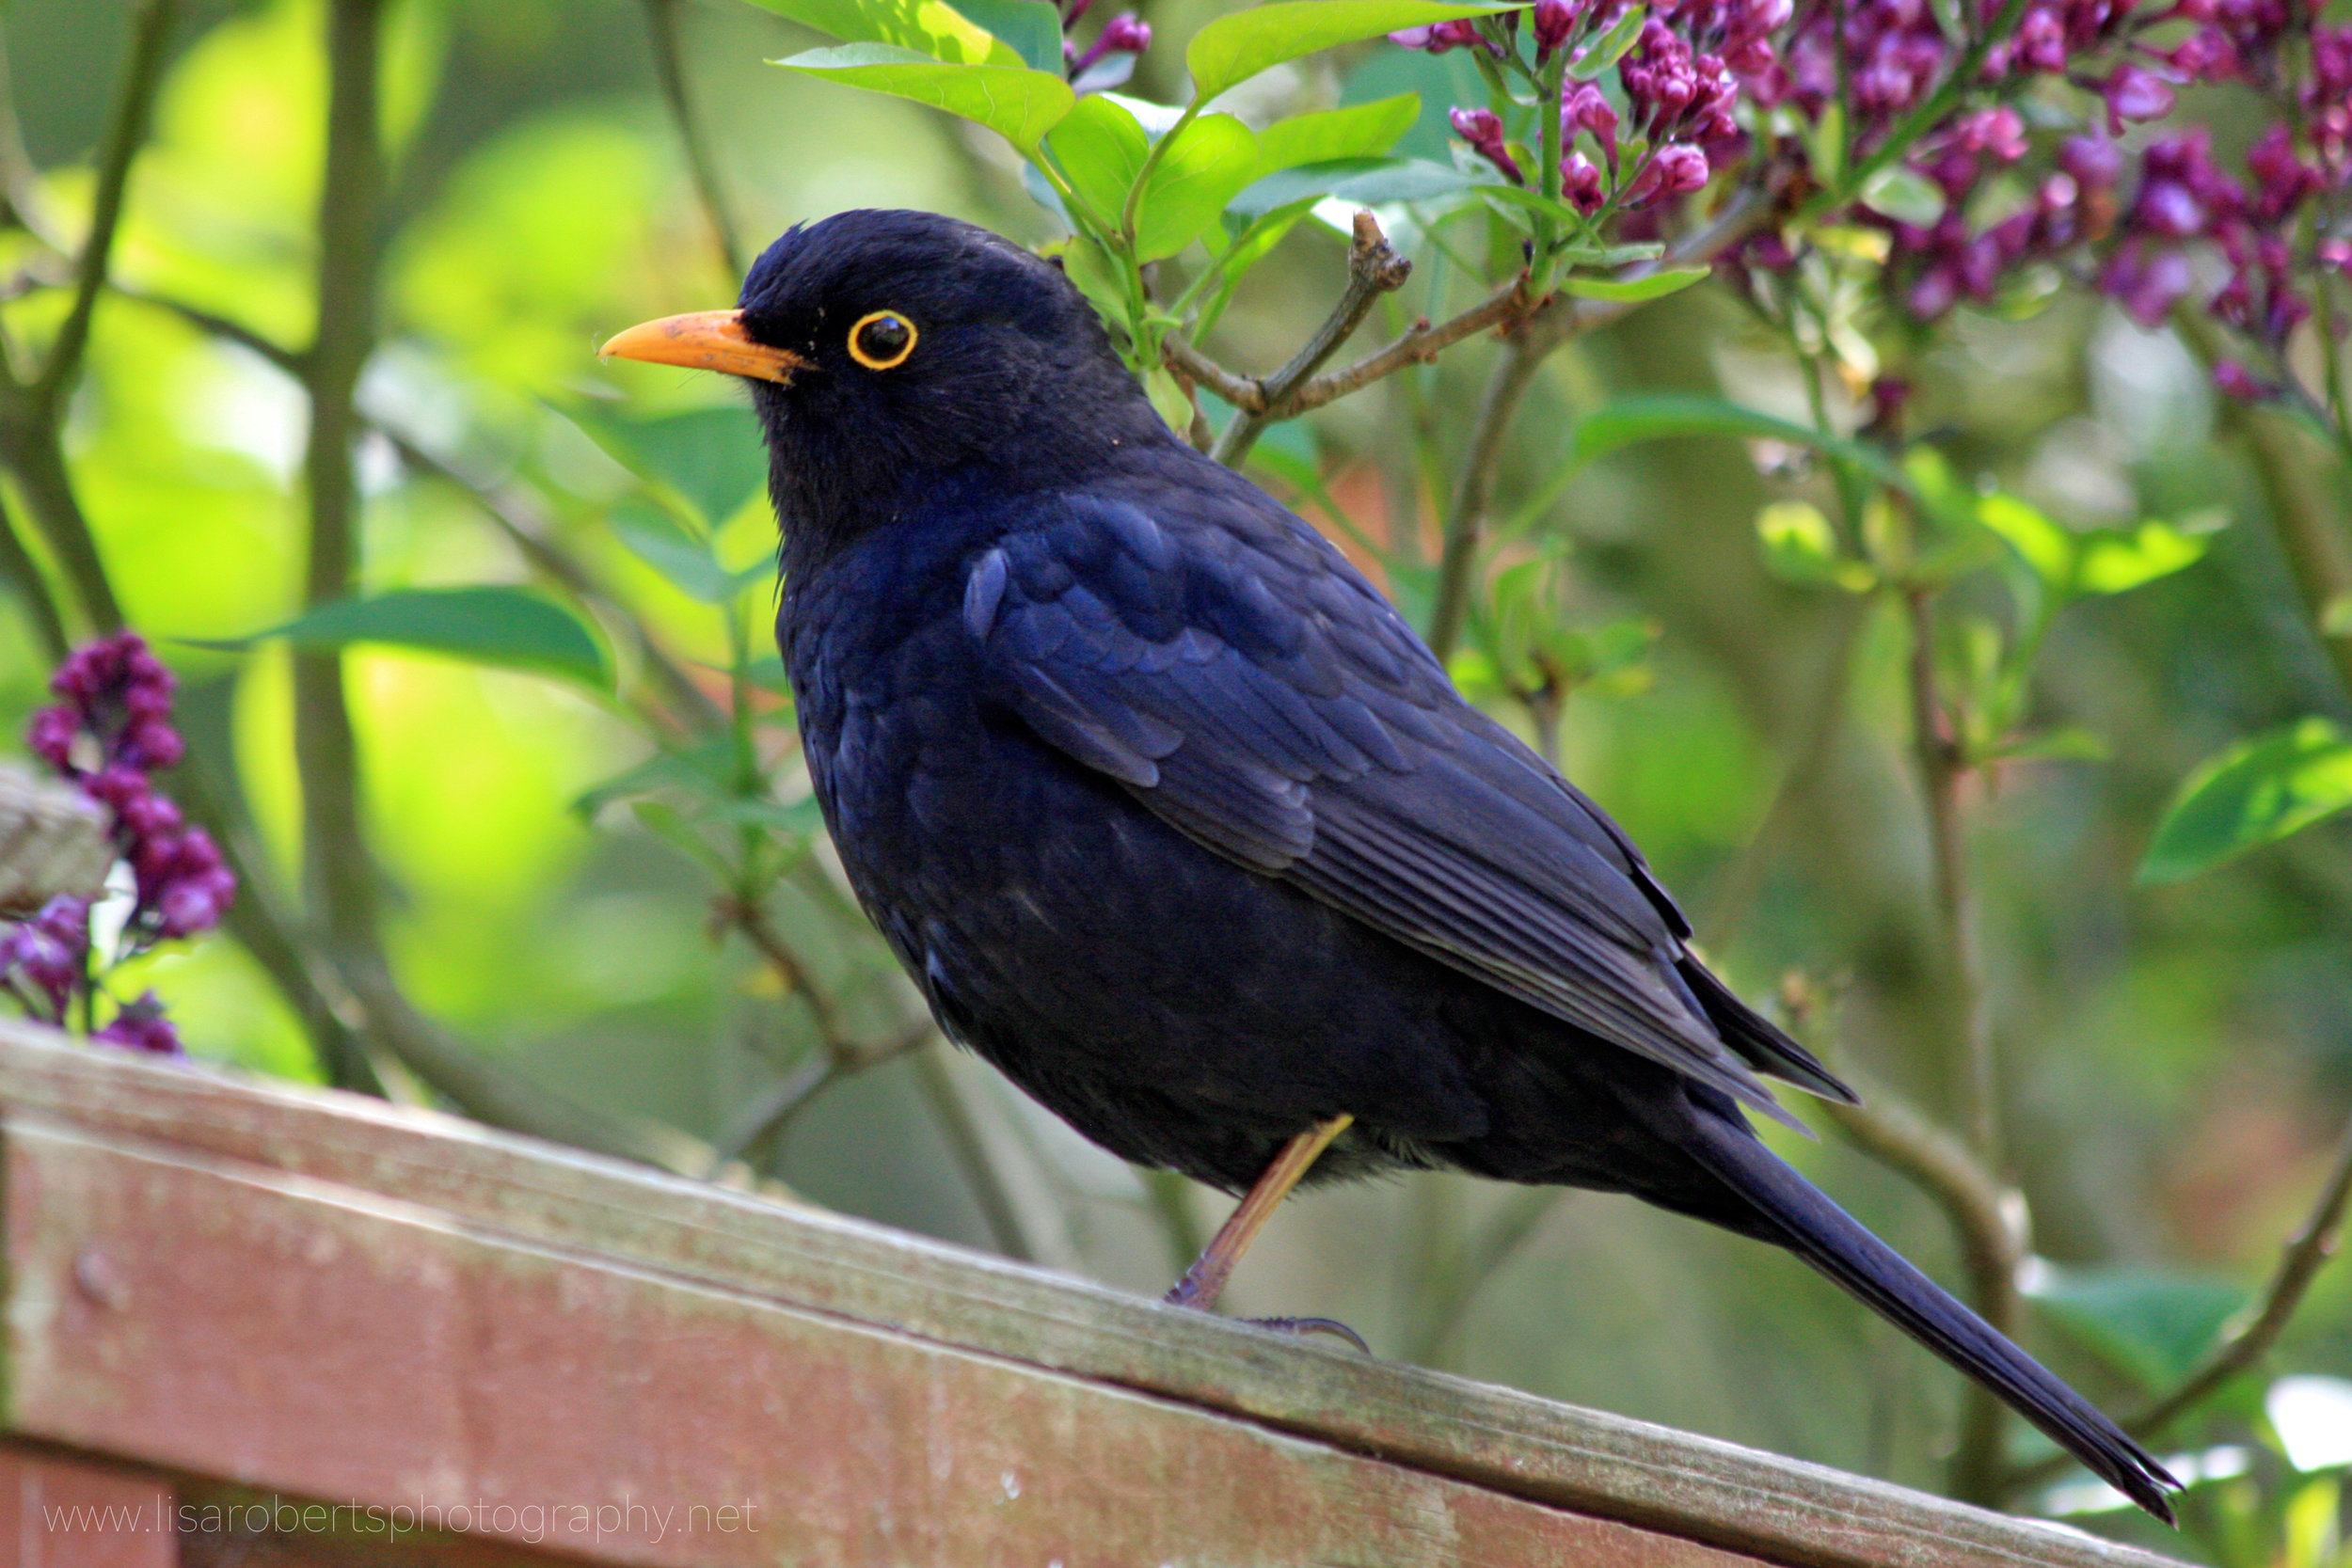  Male Blackbird by Lilac bush 